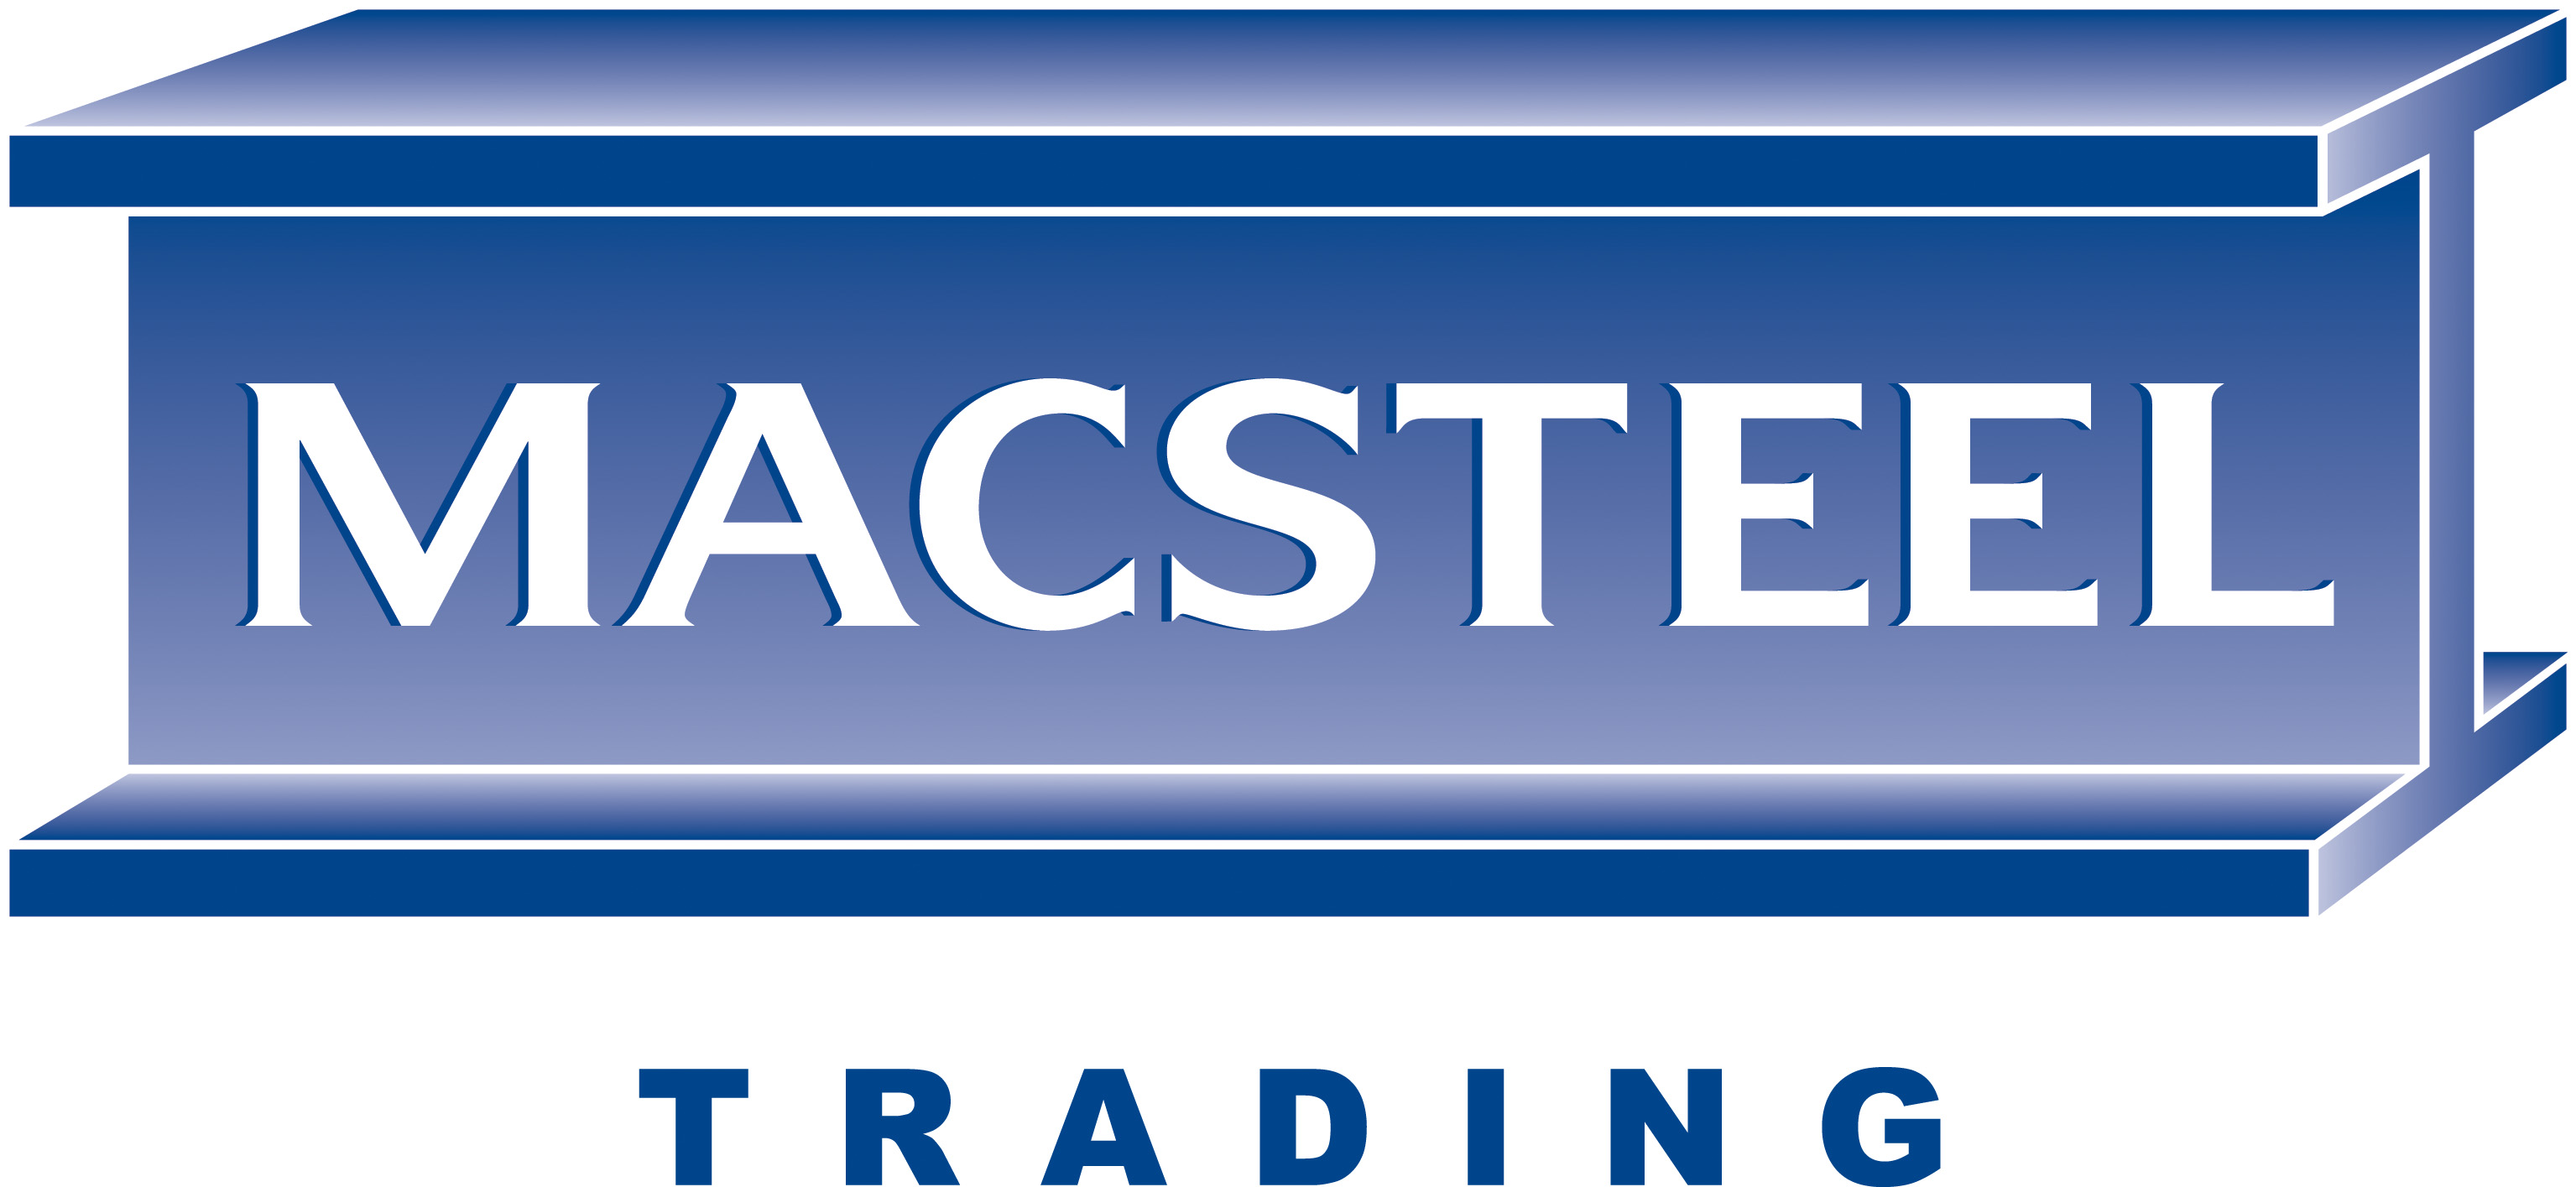 Macsteel Trading - Cape Town logo